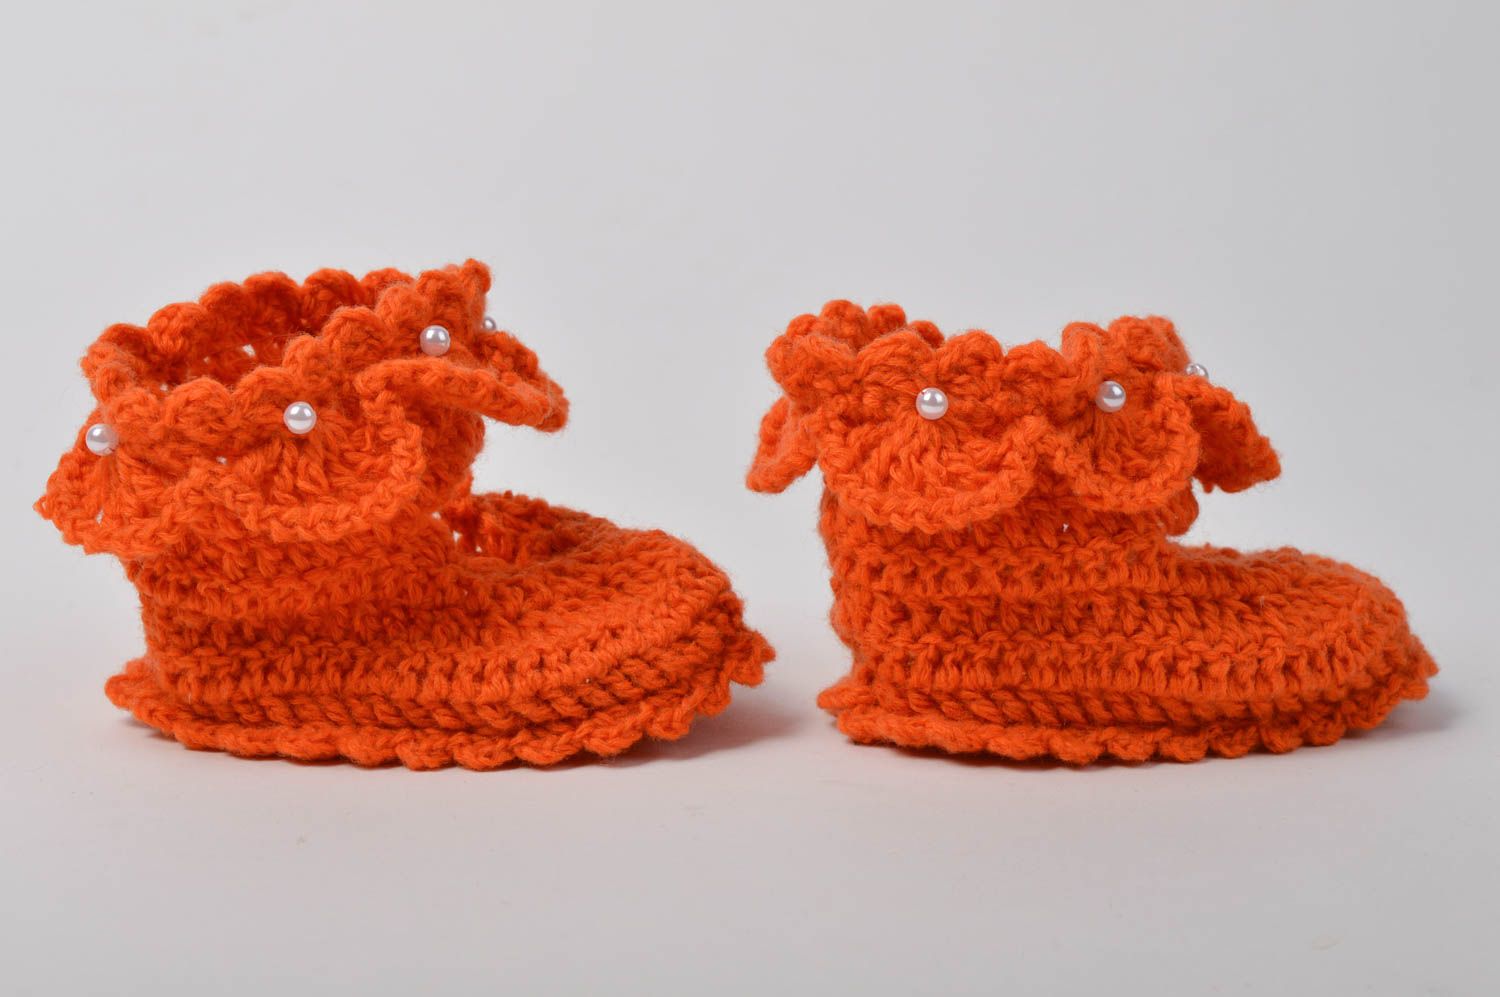 Handmade baby booties crocheted baby booties orange warm socks for kids photo 3